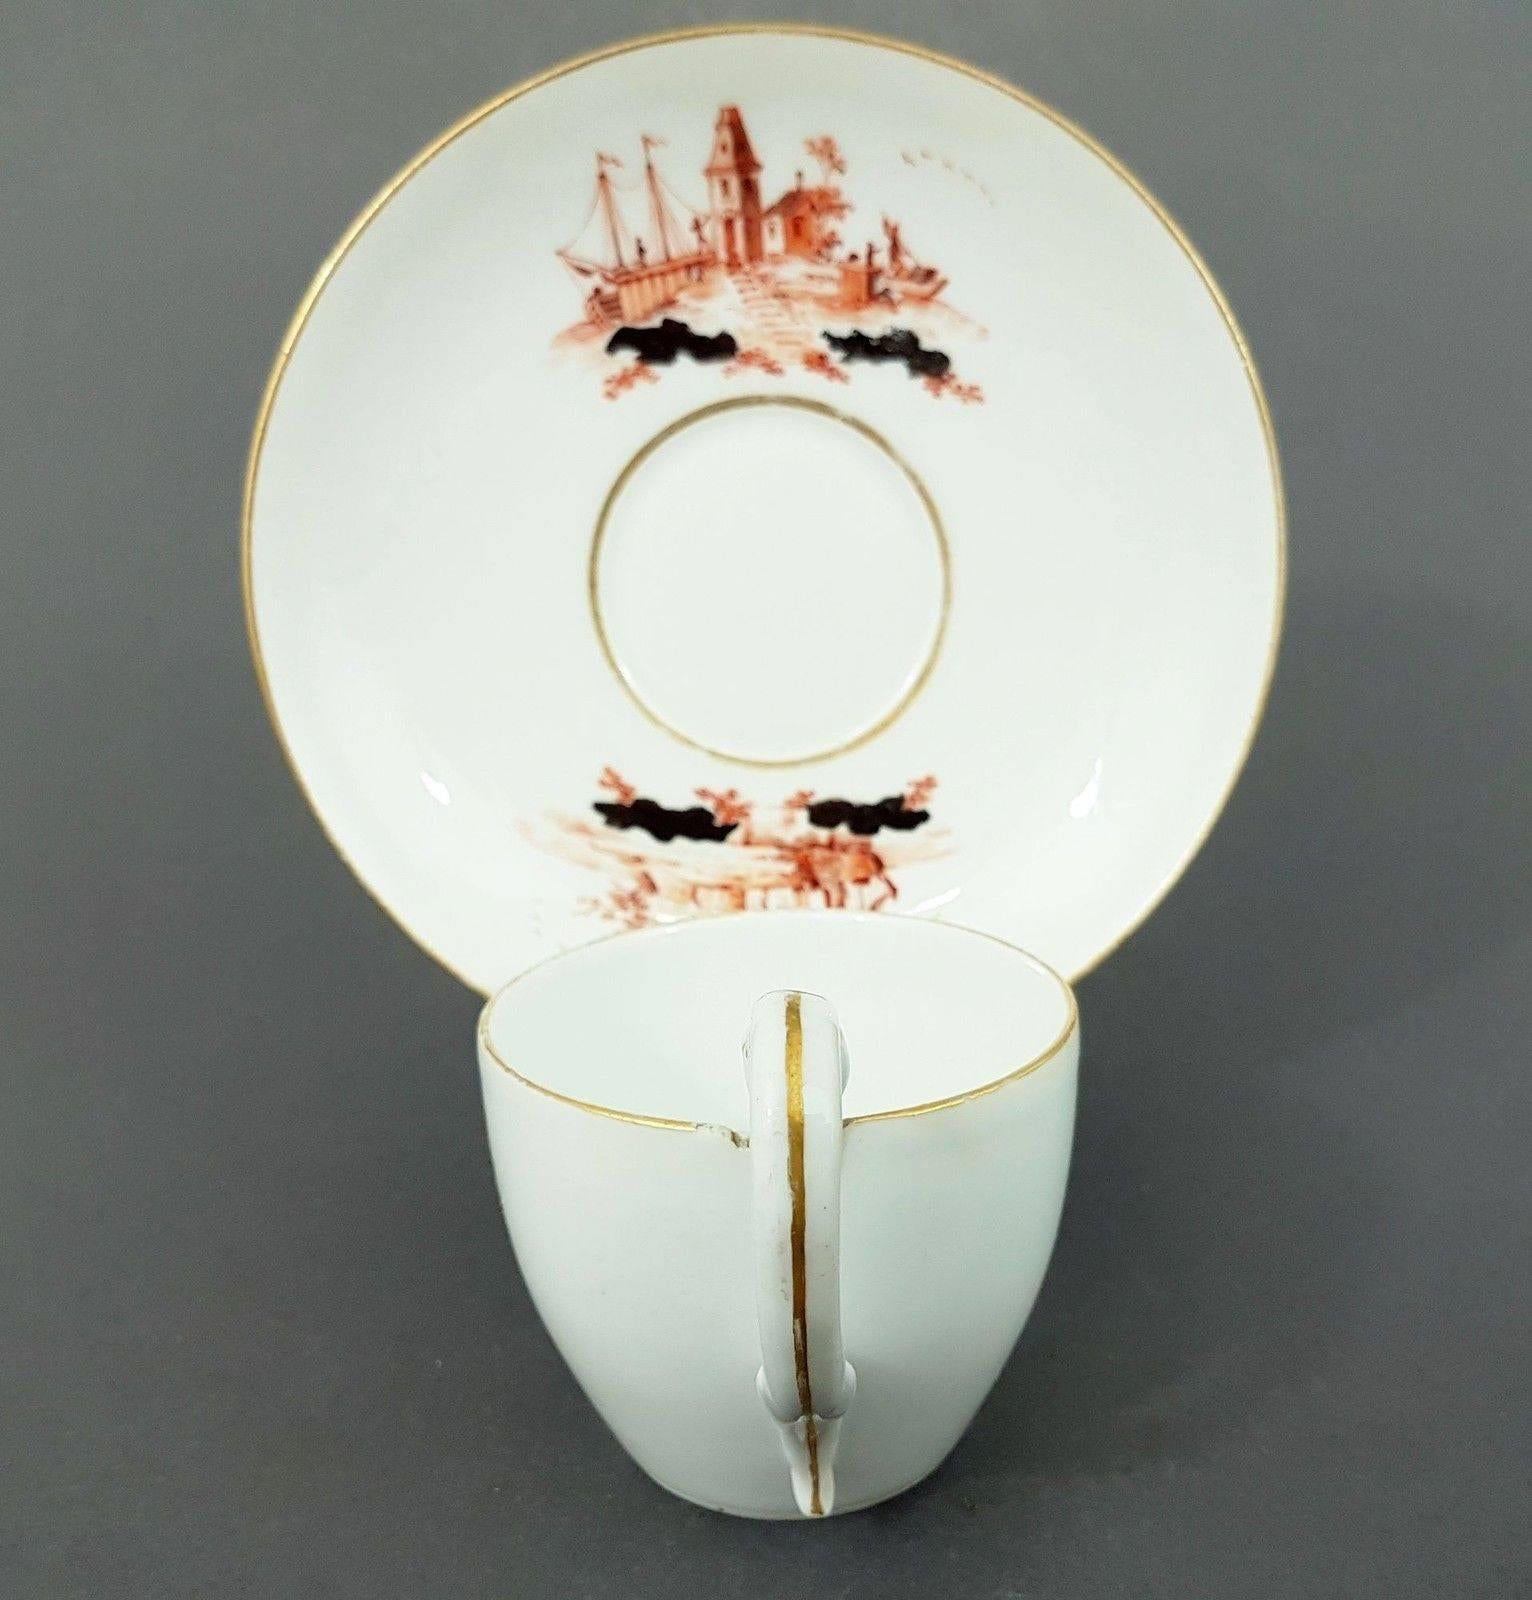 19th century Meissen Porcelain Biedermeier cup and saucer with swan handle, circa 1820
Landscape scene.
Cup diameter 6.9 cm, height 7.3 cm (measured with handle)
Saucer diameter 14 cm.